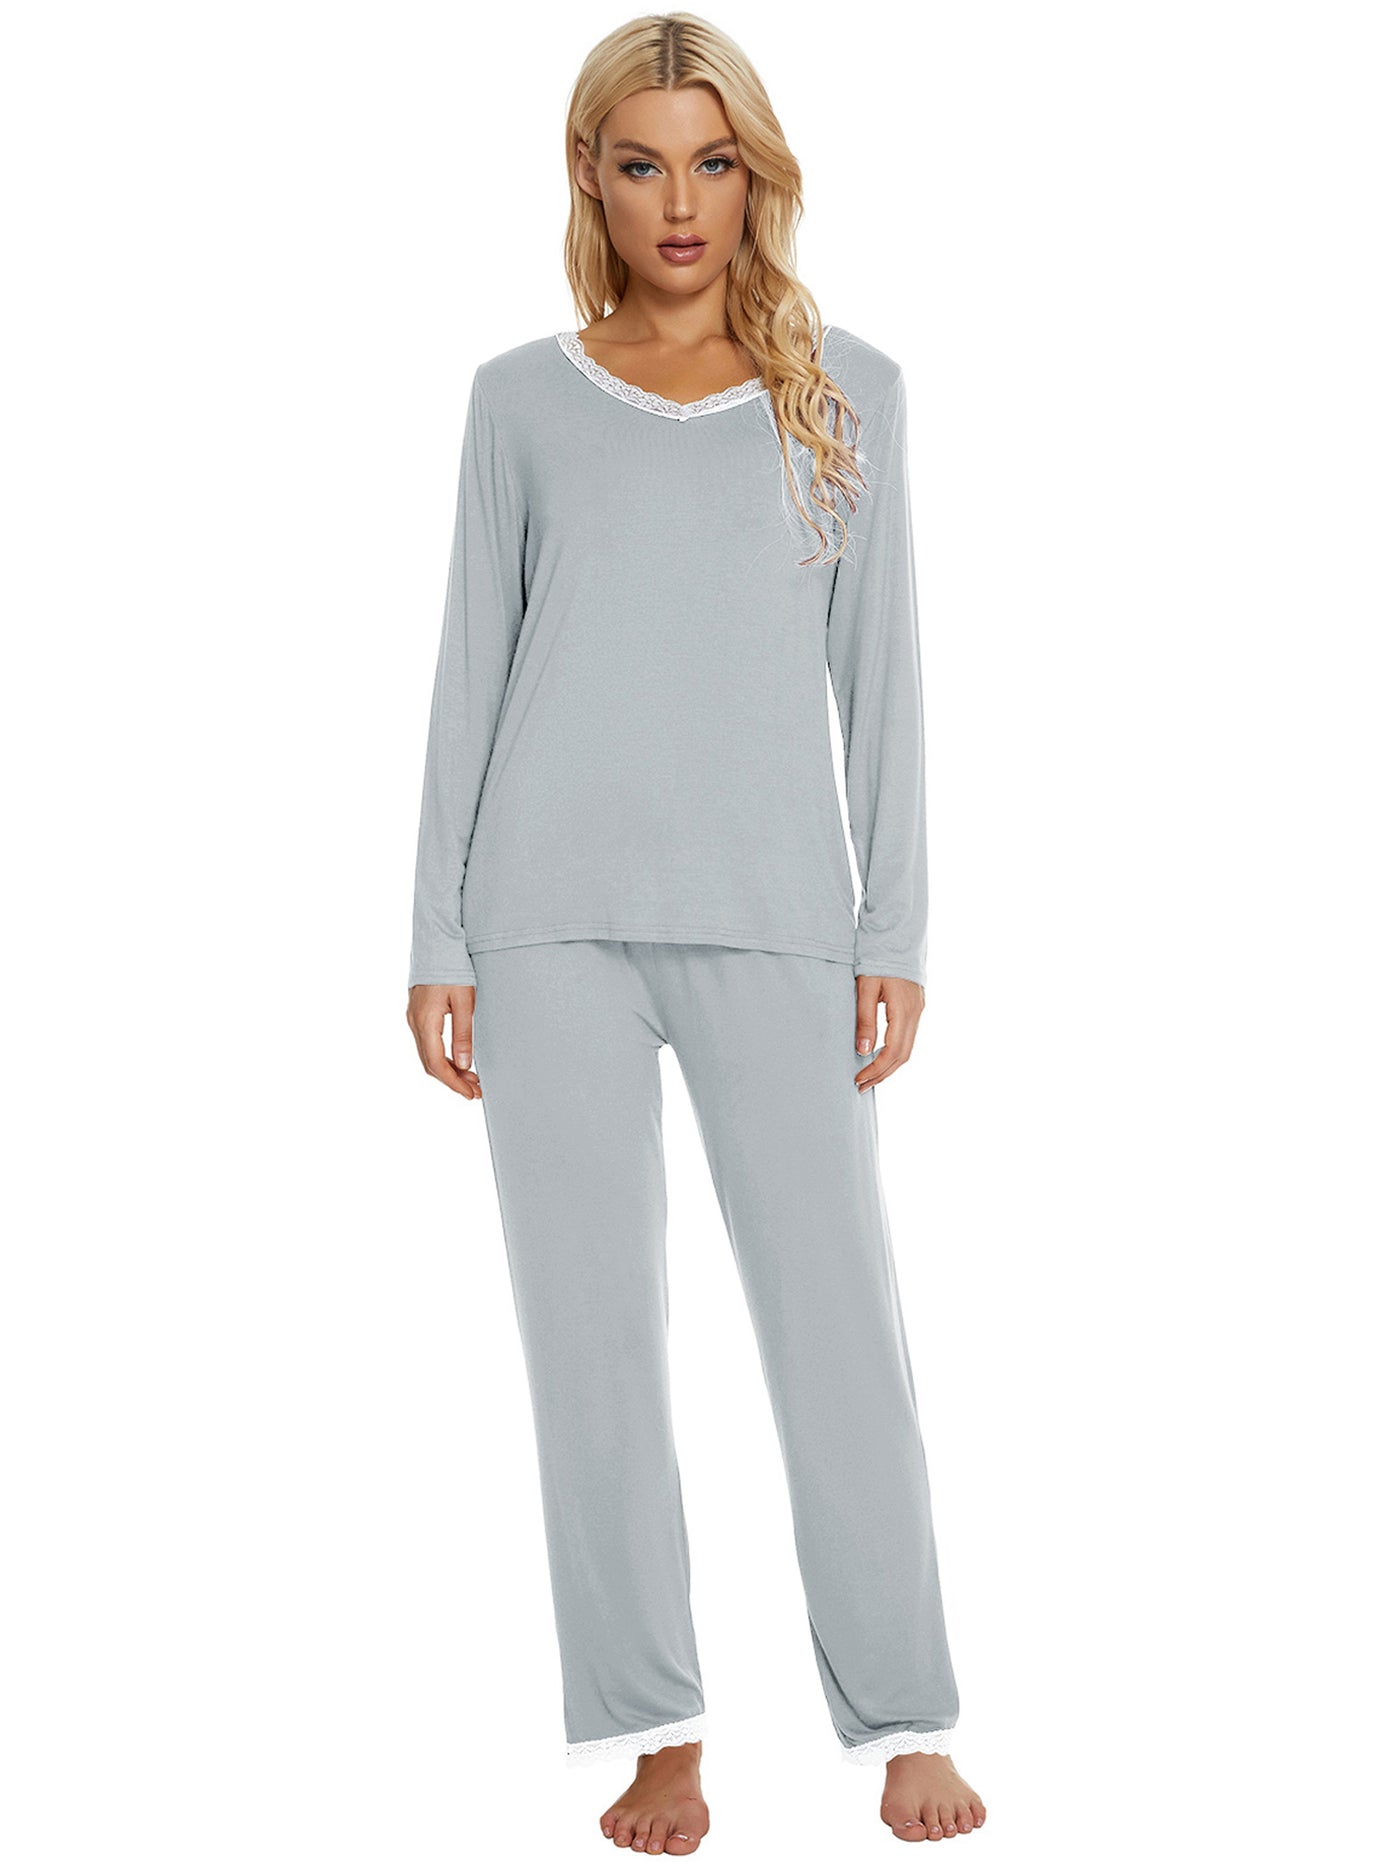 Bublédon Sleepwear V Neck Lace Nightwear Pants Loungewear Pajama Set